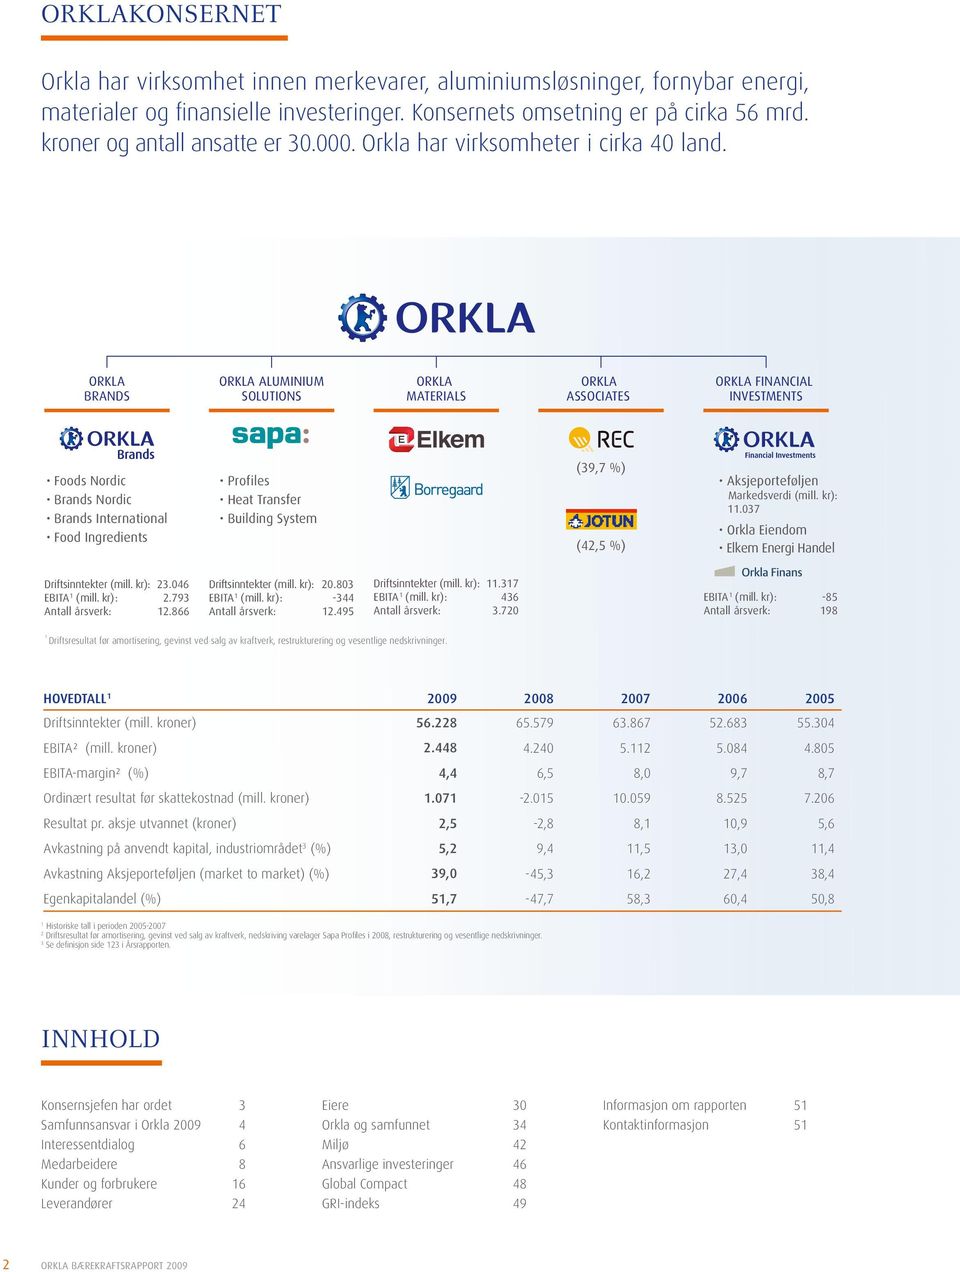 ORKLA BRANDS ORKLA ALUMINIUM SOLUTIONS ORKLA MATERIALS ORKLA ASSOCIATES ORKLA FINANCIAL INVESTMENTS Foods Nordic Brands Nordic Brands International Food Ingredients Profiles Heat Transfer Building